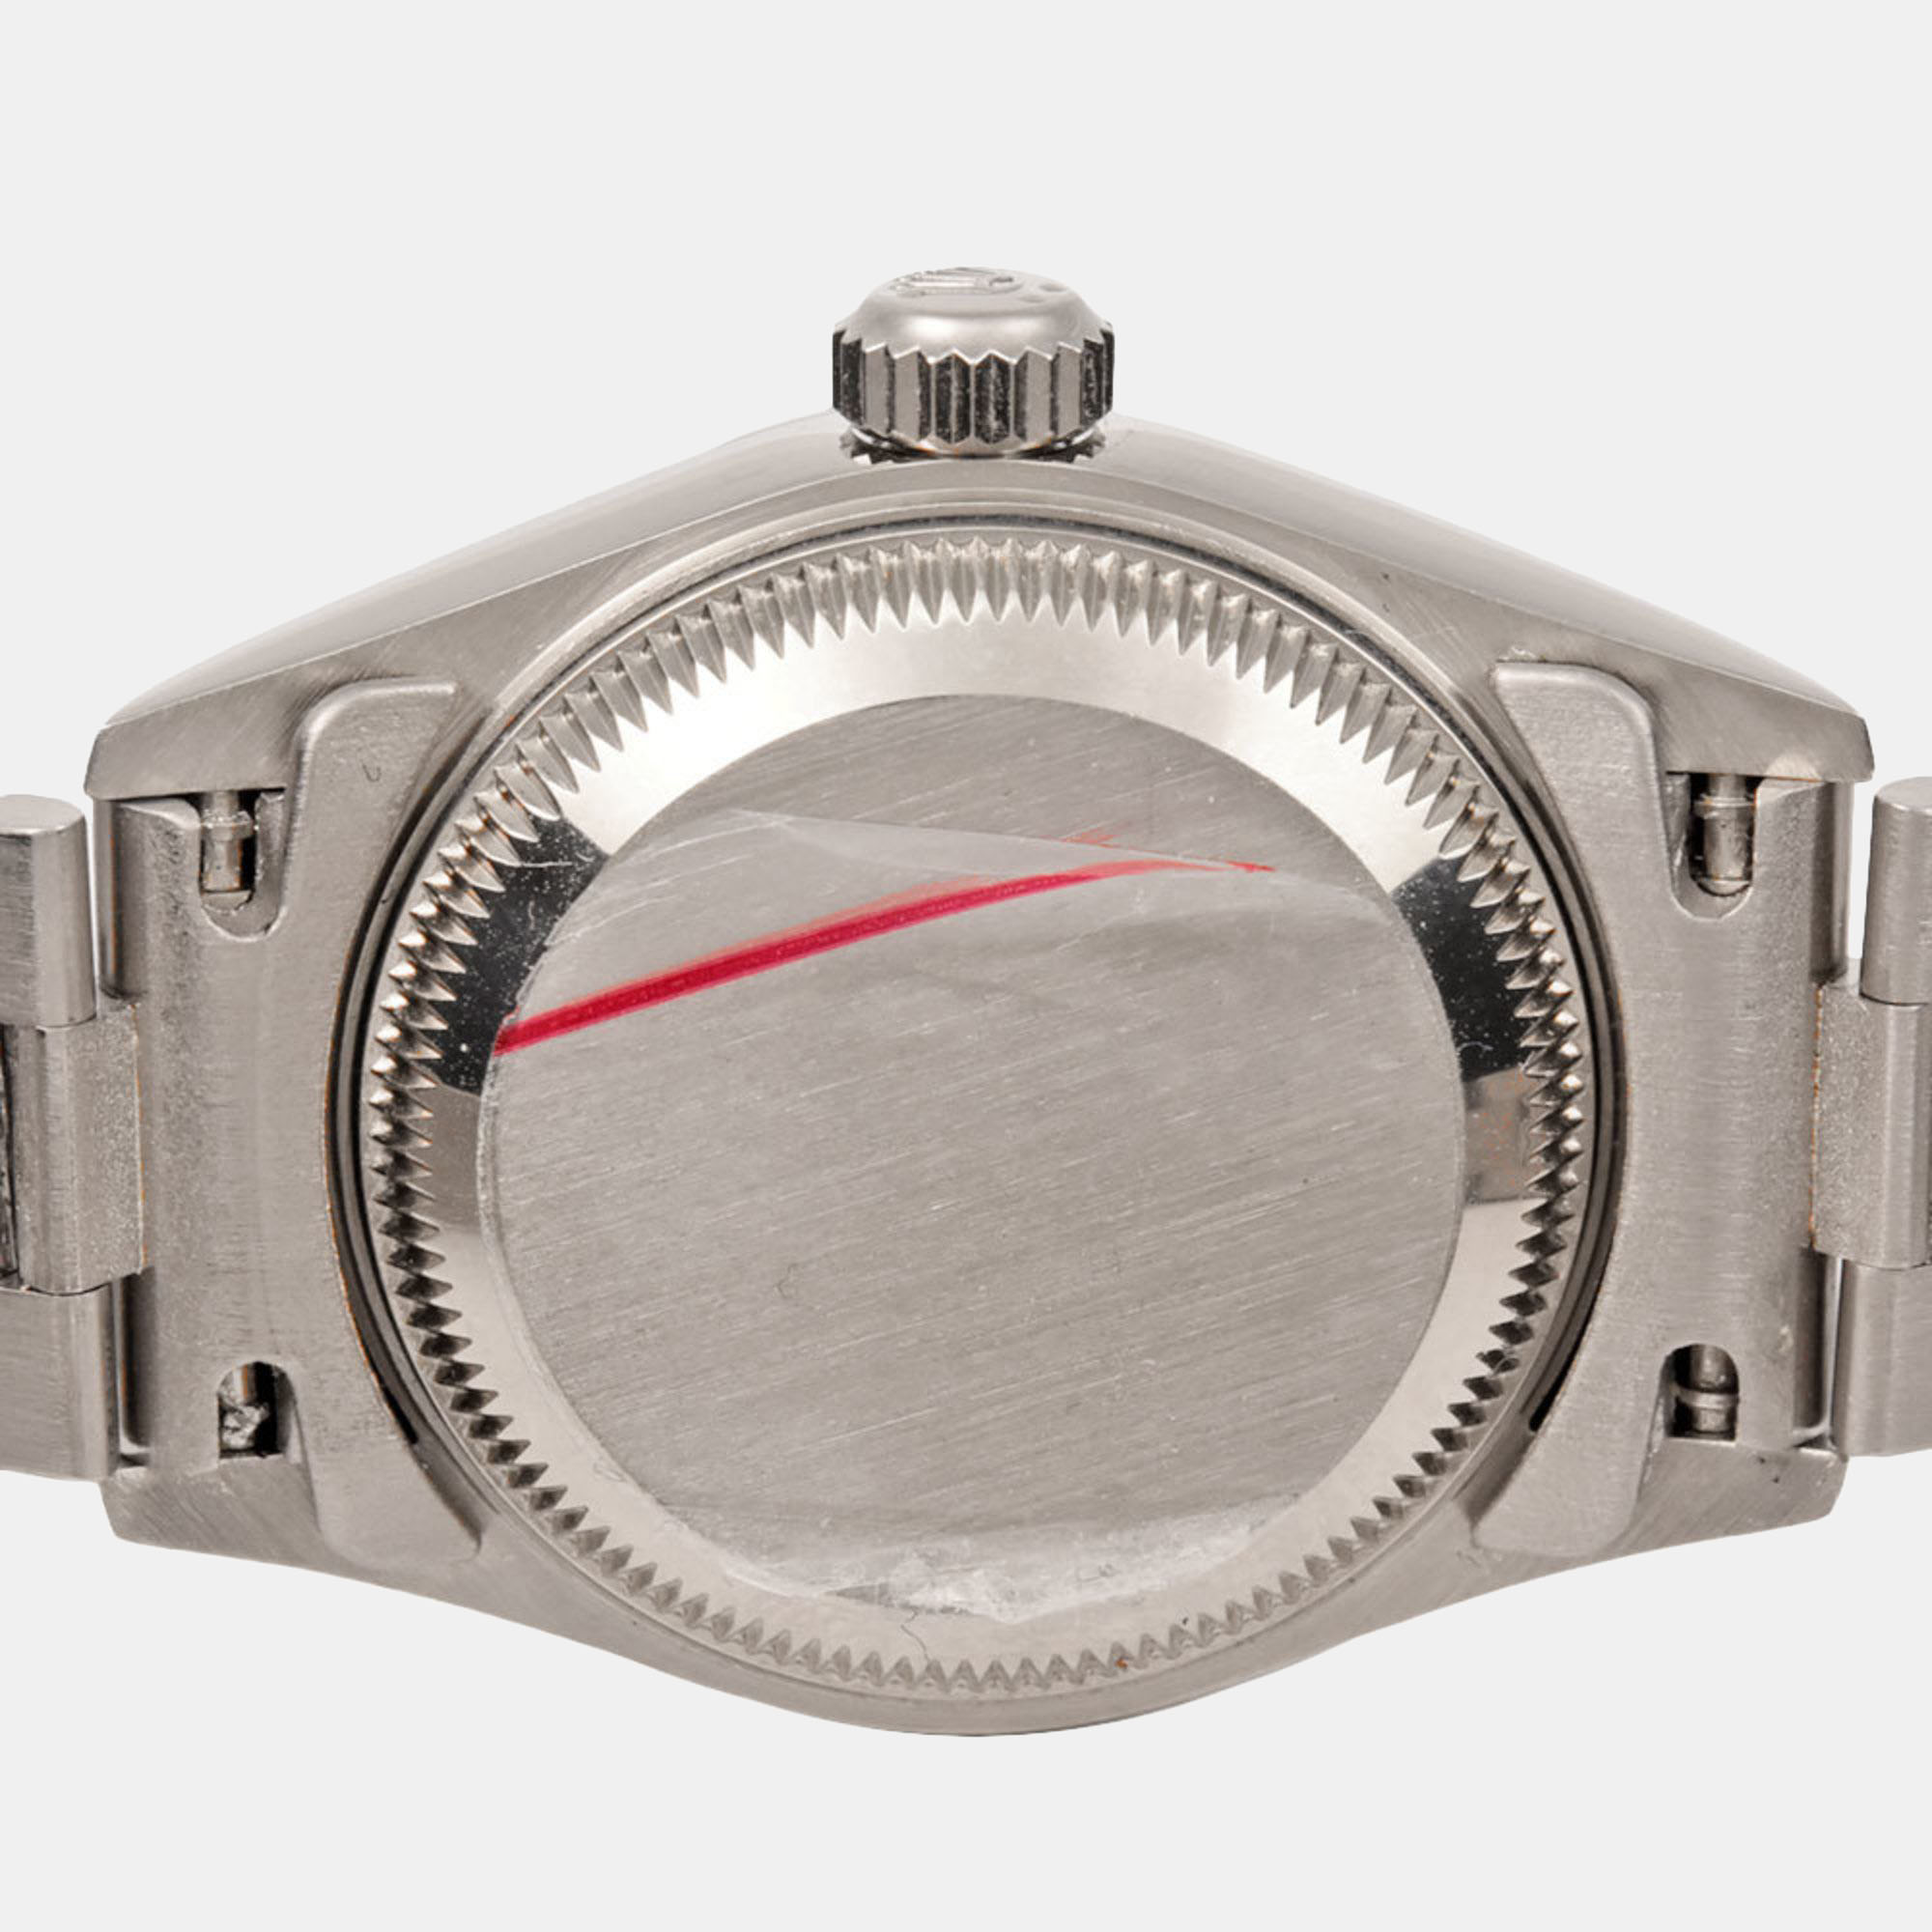 Rolex Black Diamond 18k White Gold Datejust 79279 Automatic Women's Wristwatch 26 Mm